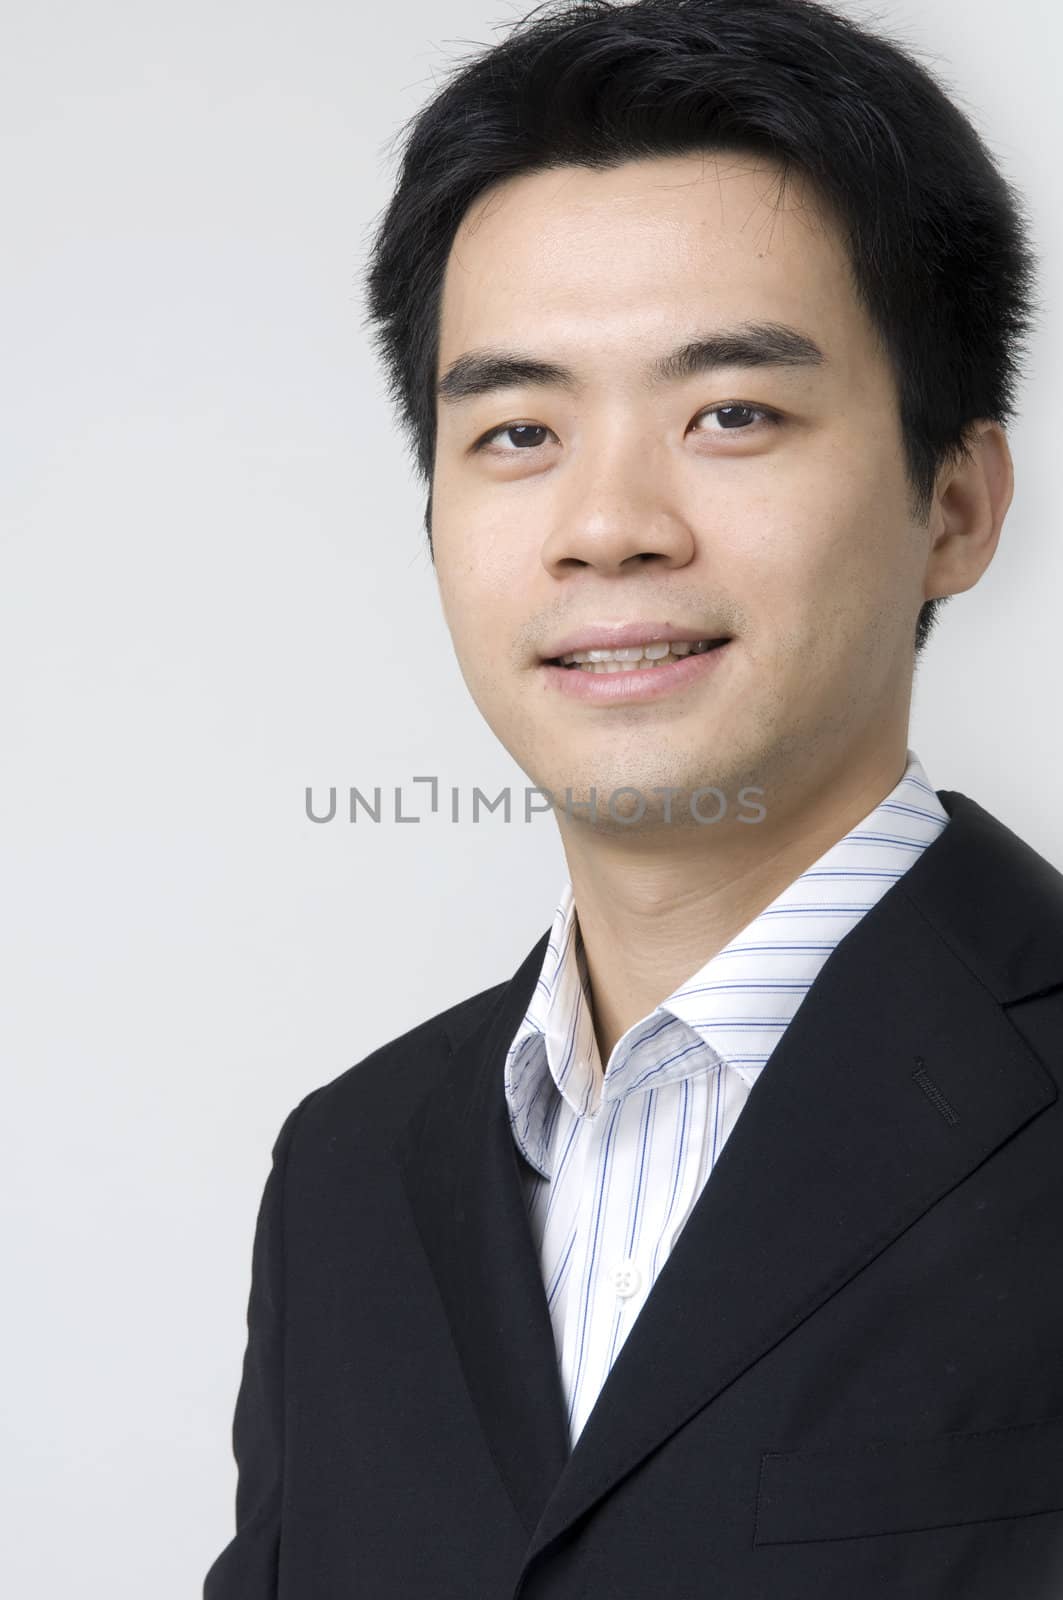 asian businessman by yuliang11